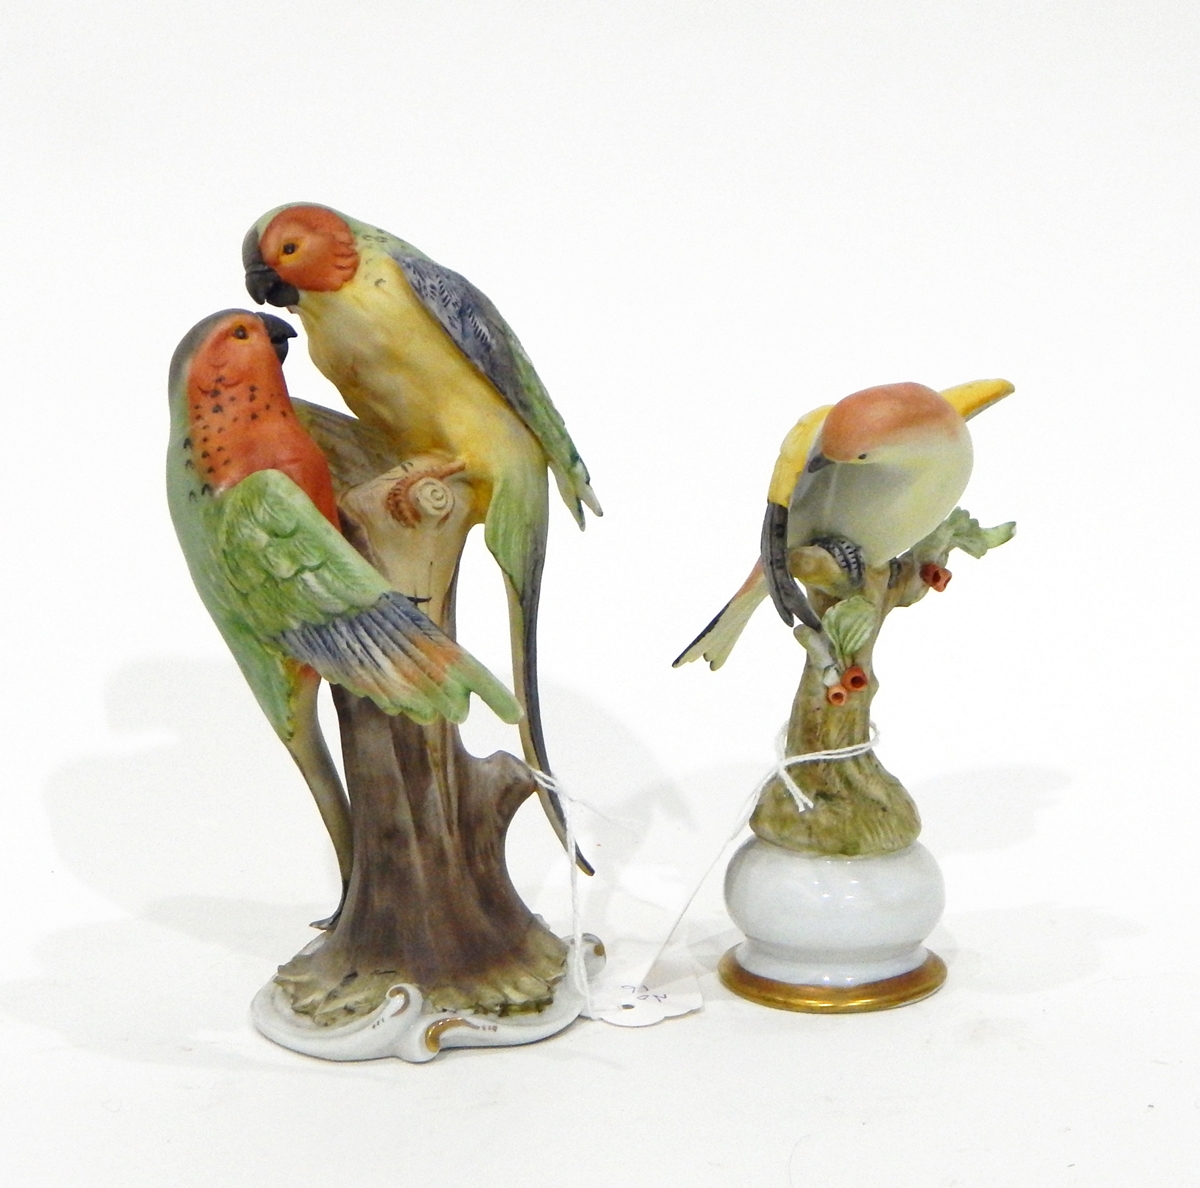 13 Capodimonte bird ornaments including a pair of love birds perched on a branch, a blackbird,